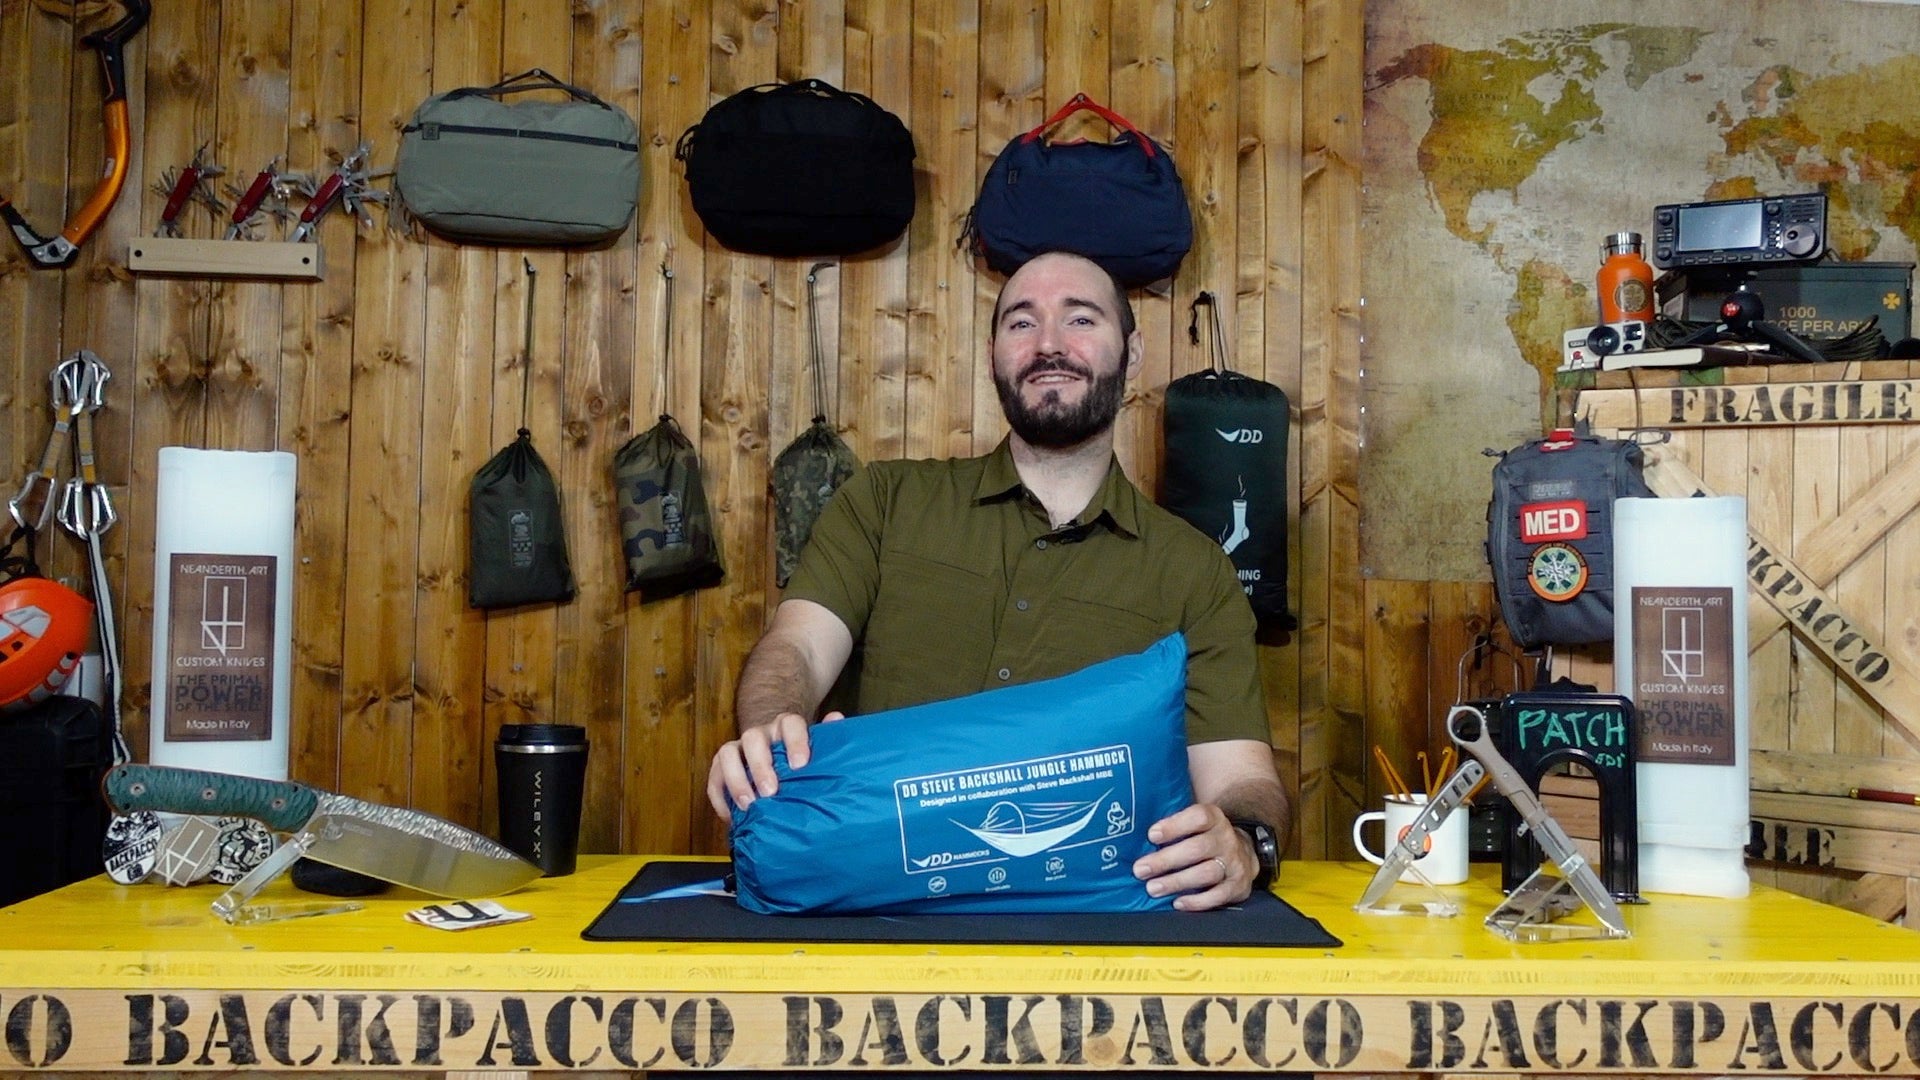 Paolo di Backpacco spiega la Steve Backshall Jungle Hammock di DD